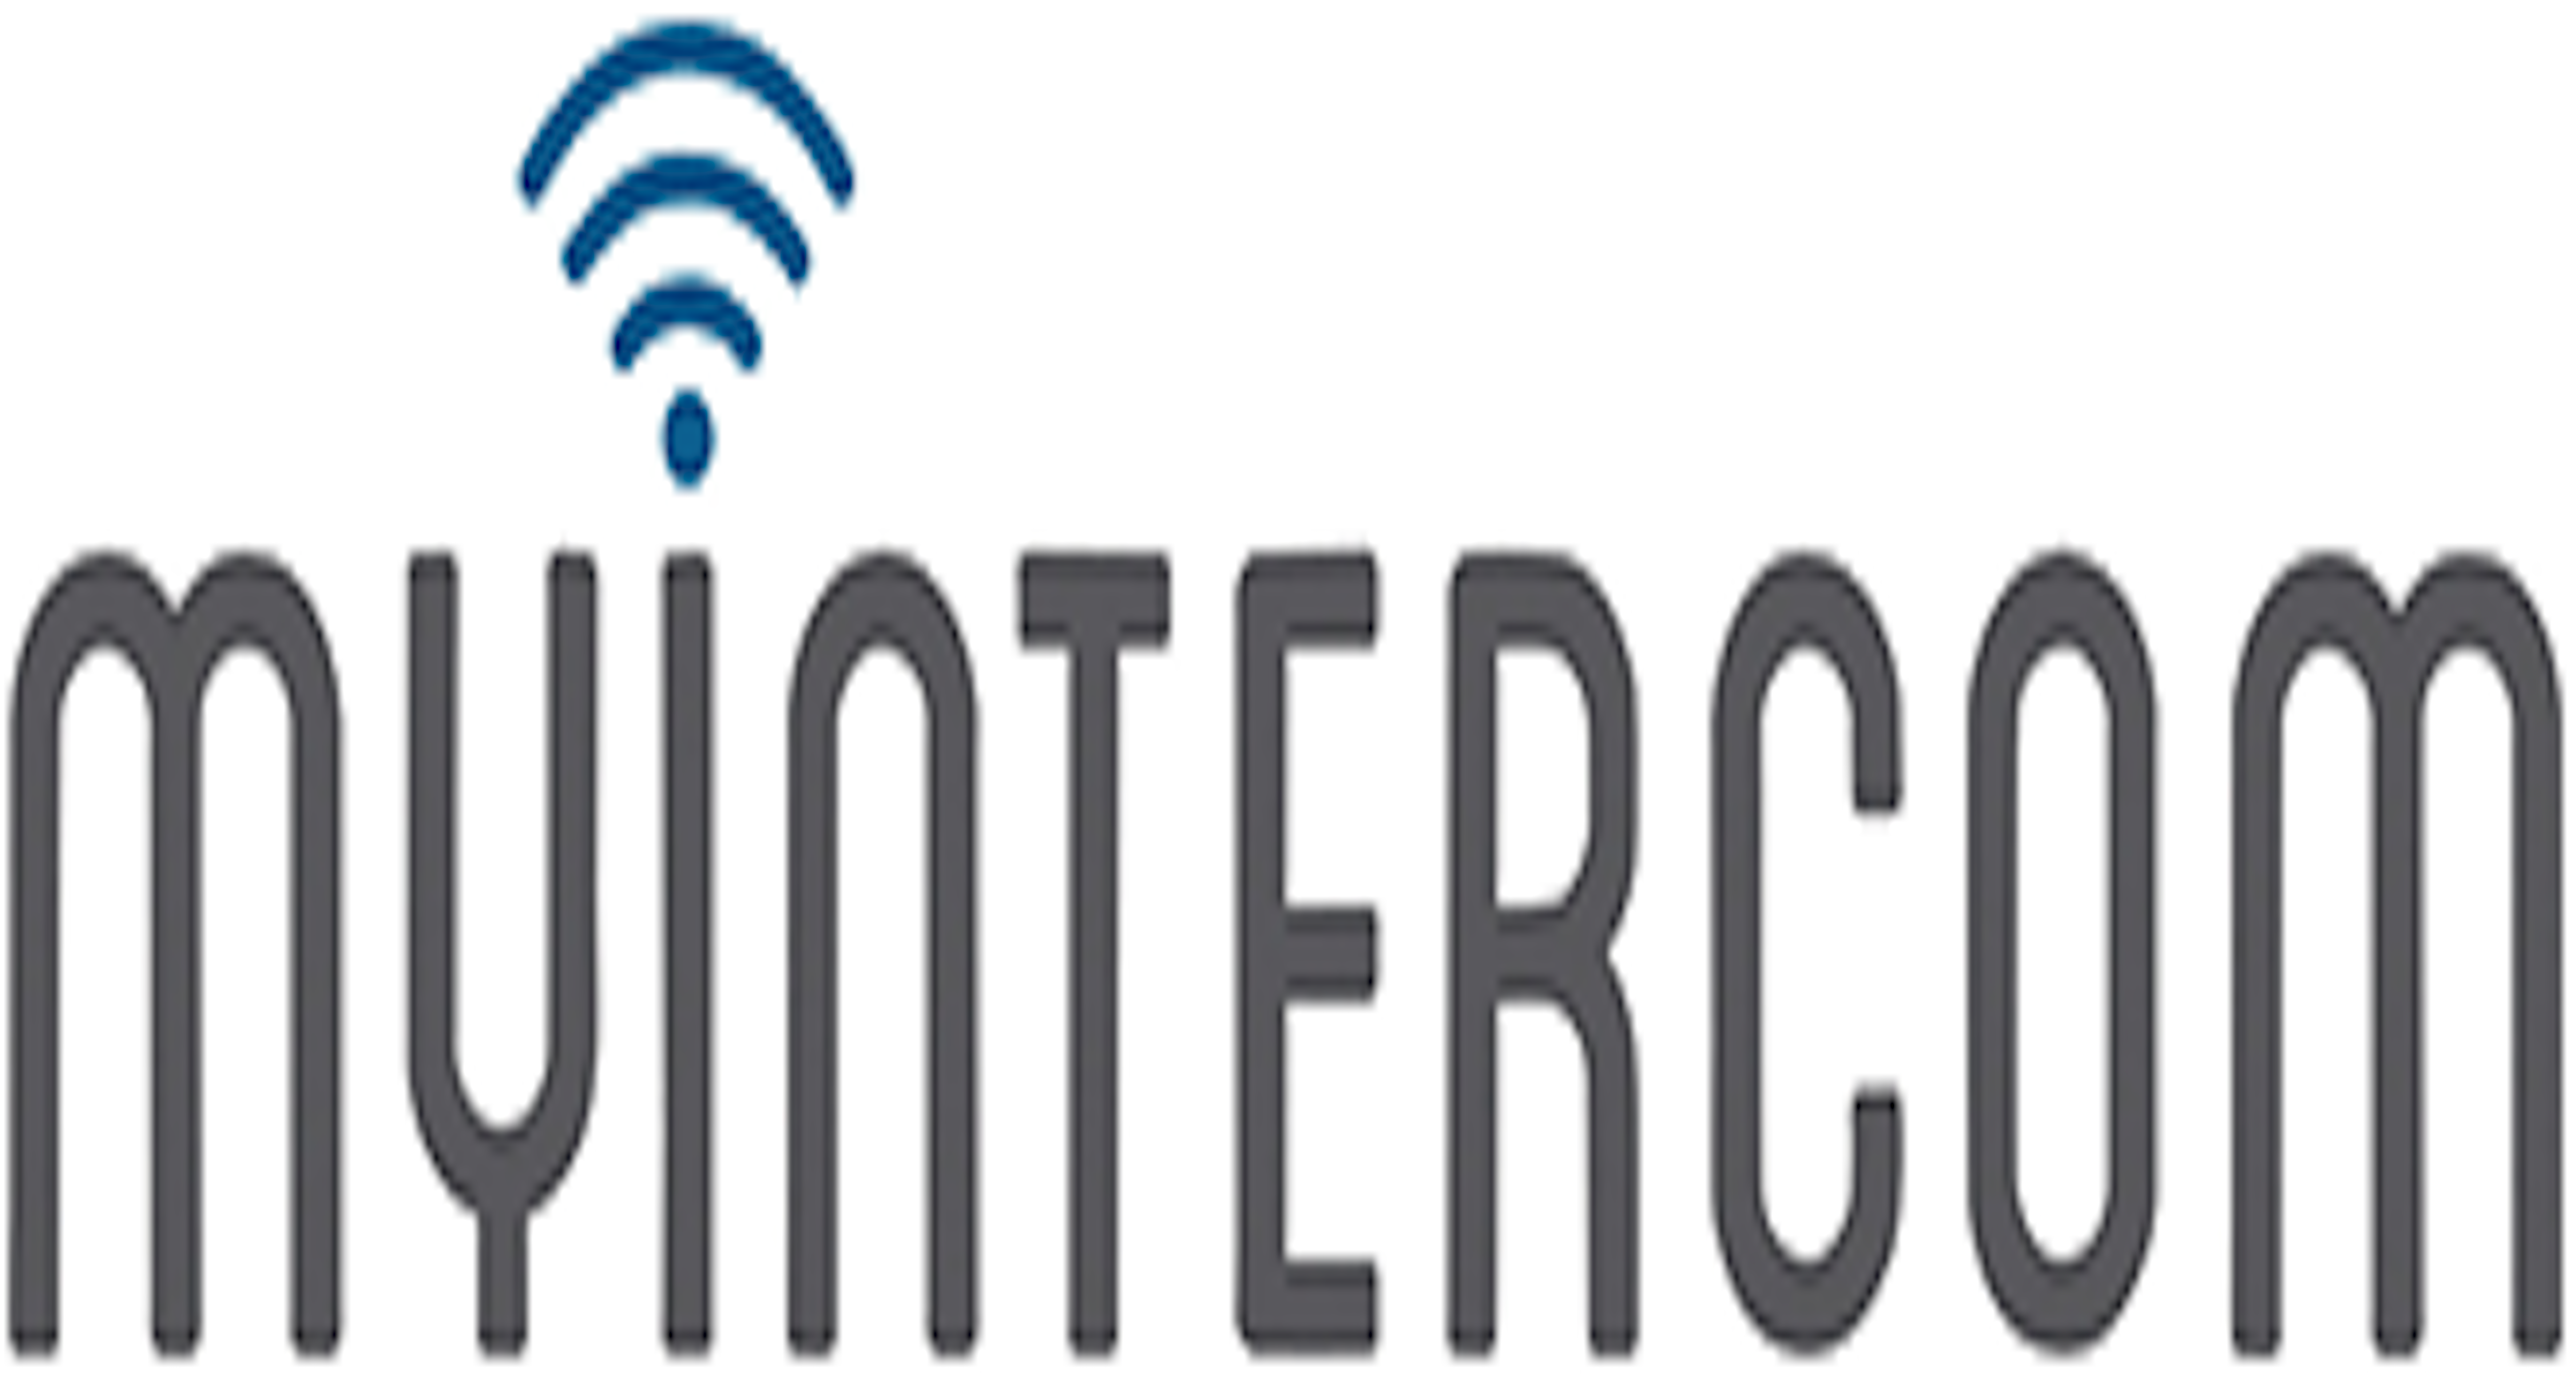 Myintercom logo